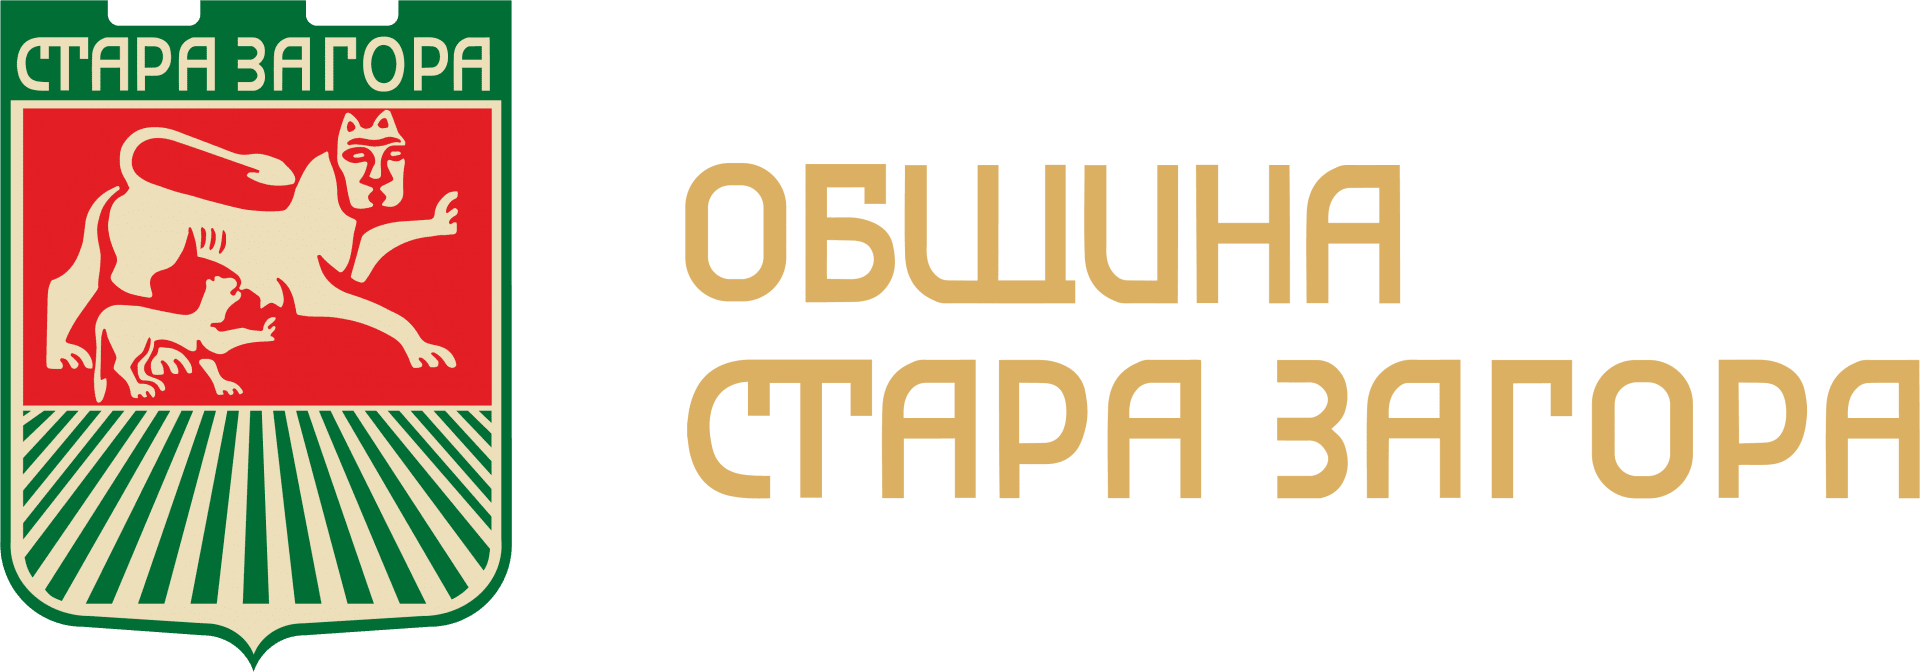 Stara Zagora Logo